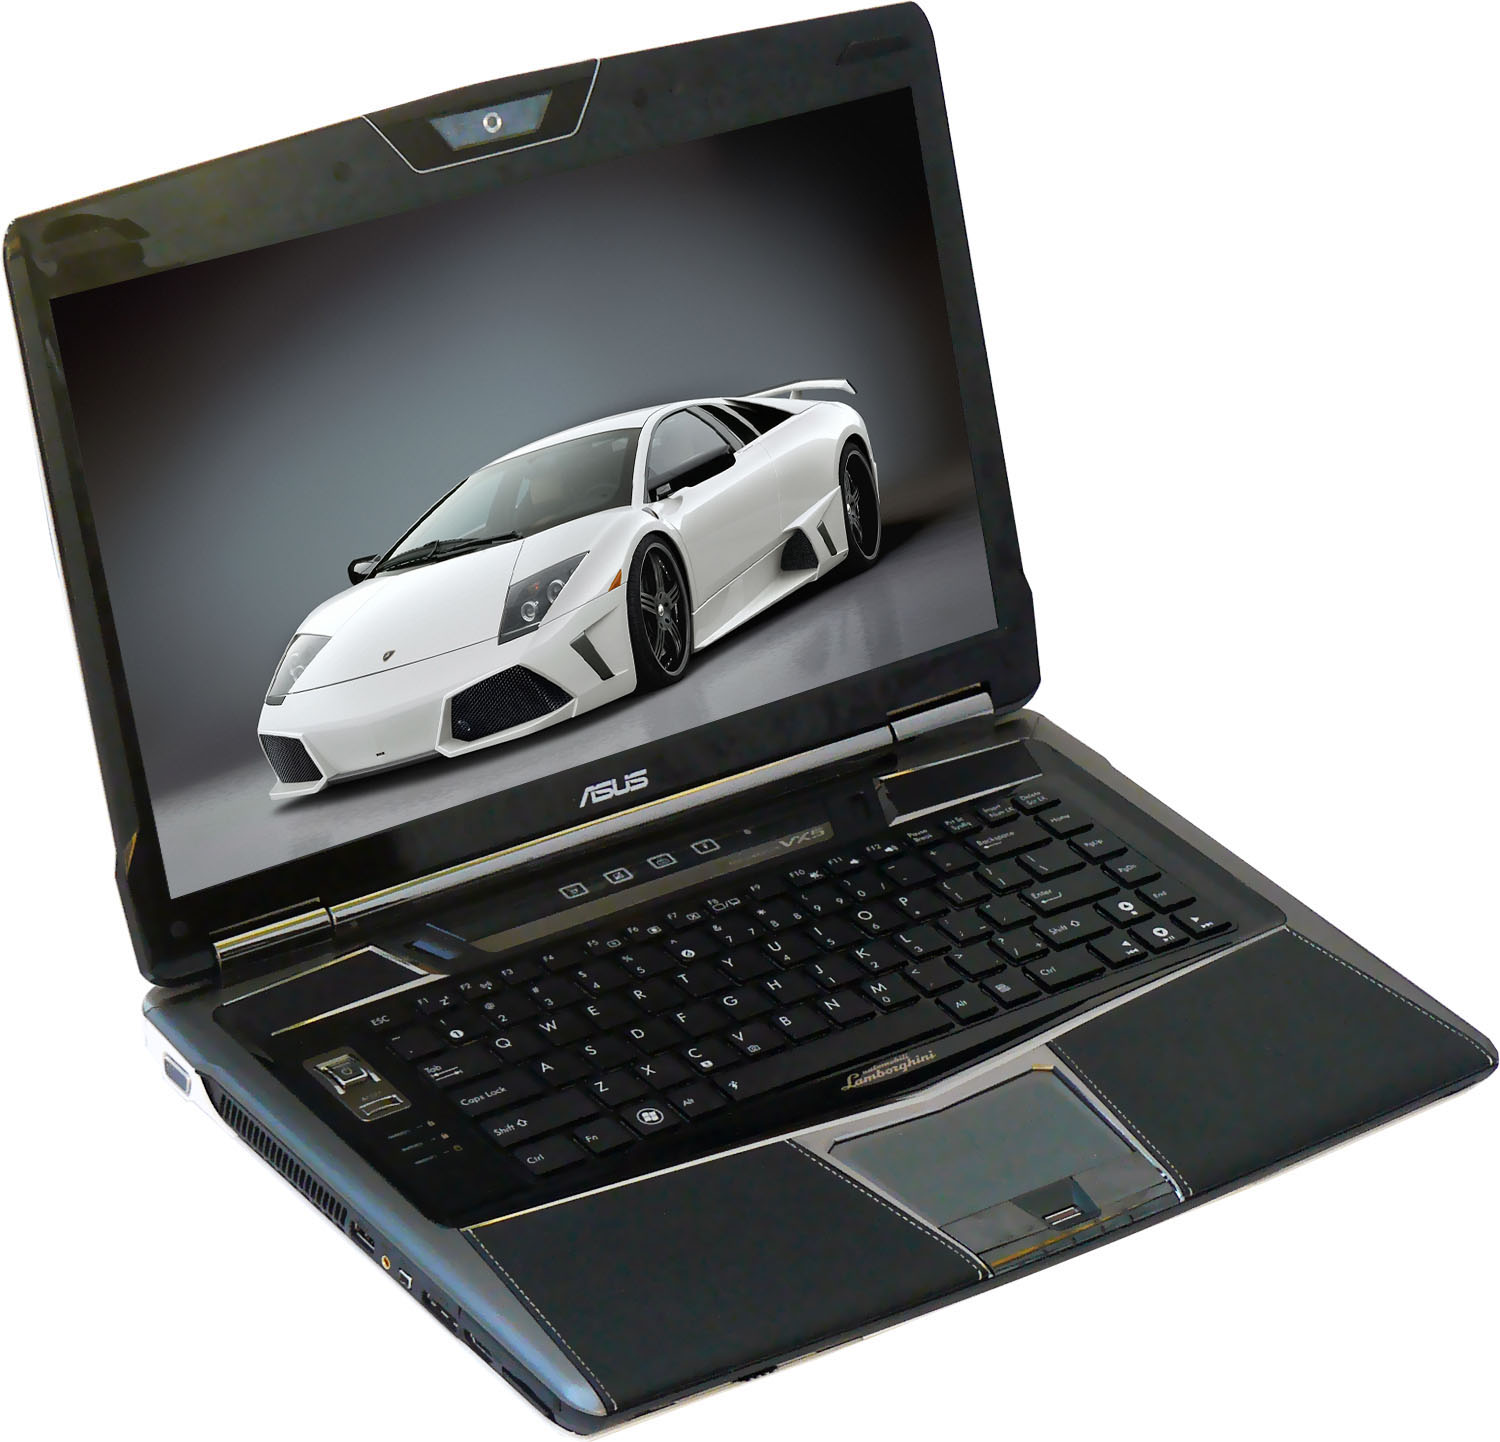 ASUS Automobili Lamborghini VX5 Notebook